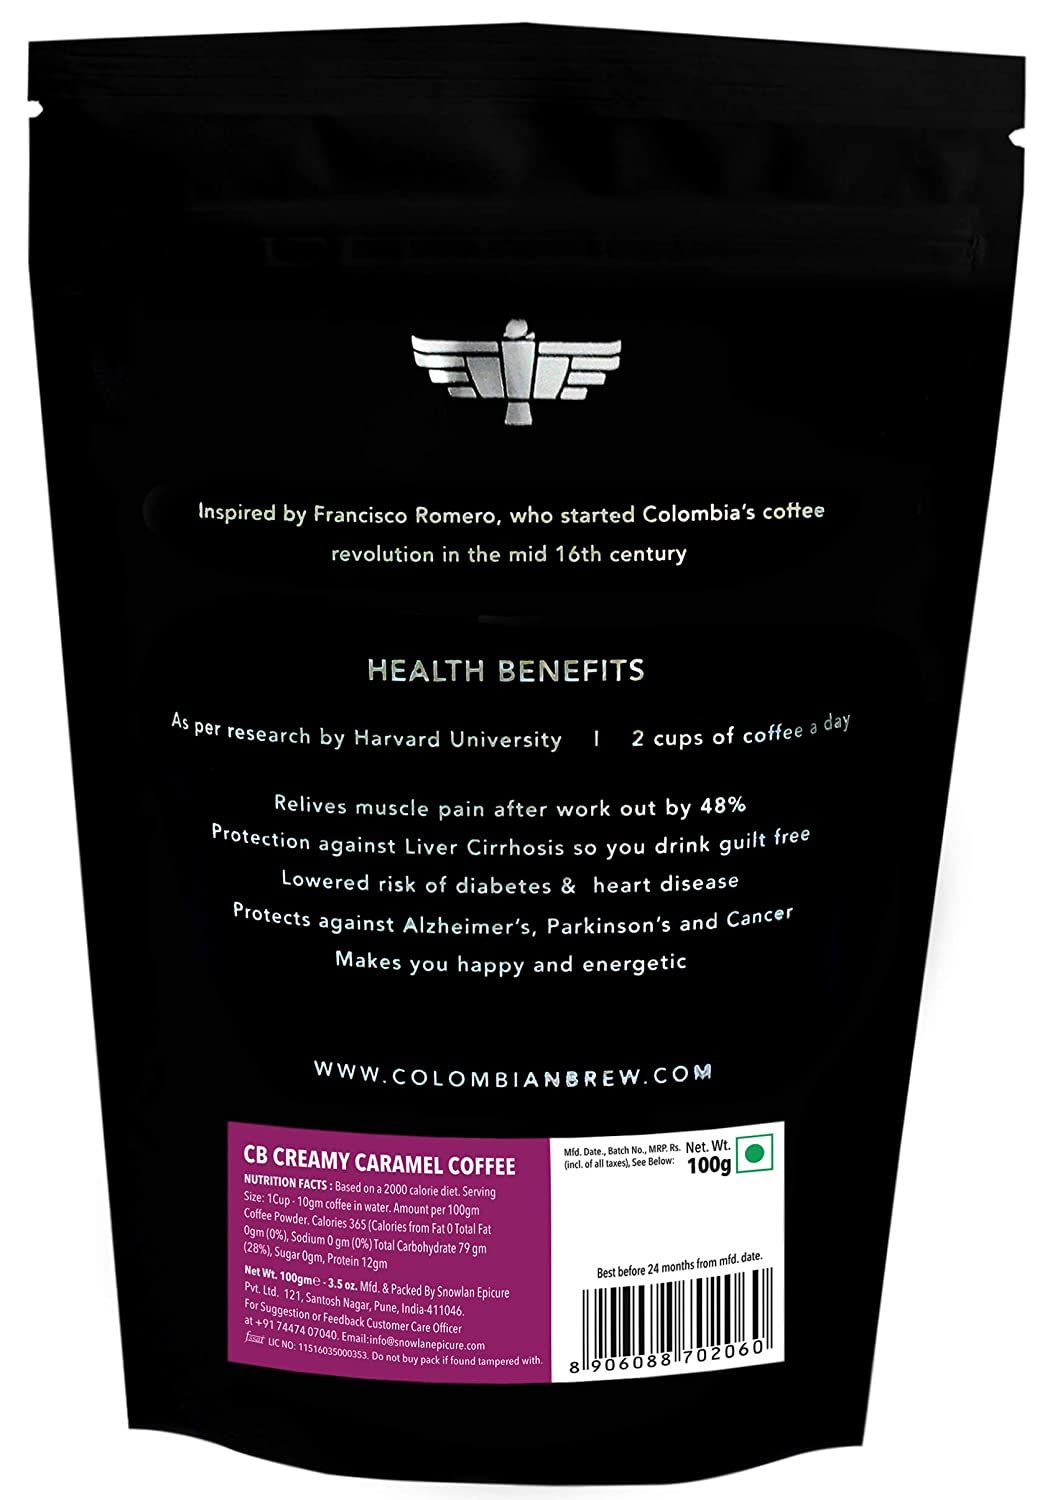 Colombian Brew Creamy Caramel Instant Coffee Powder Image